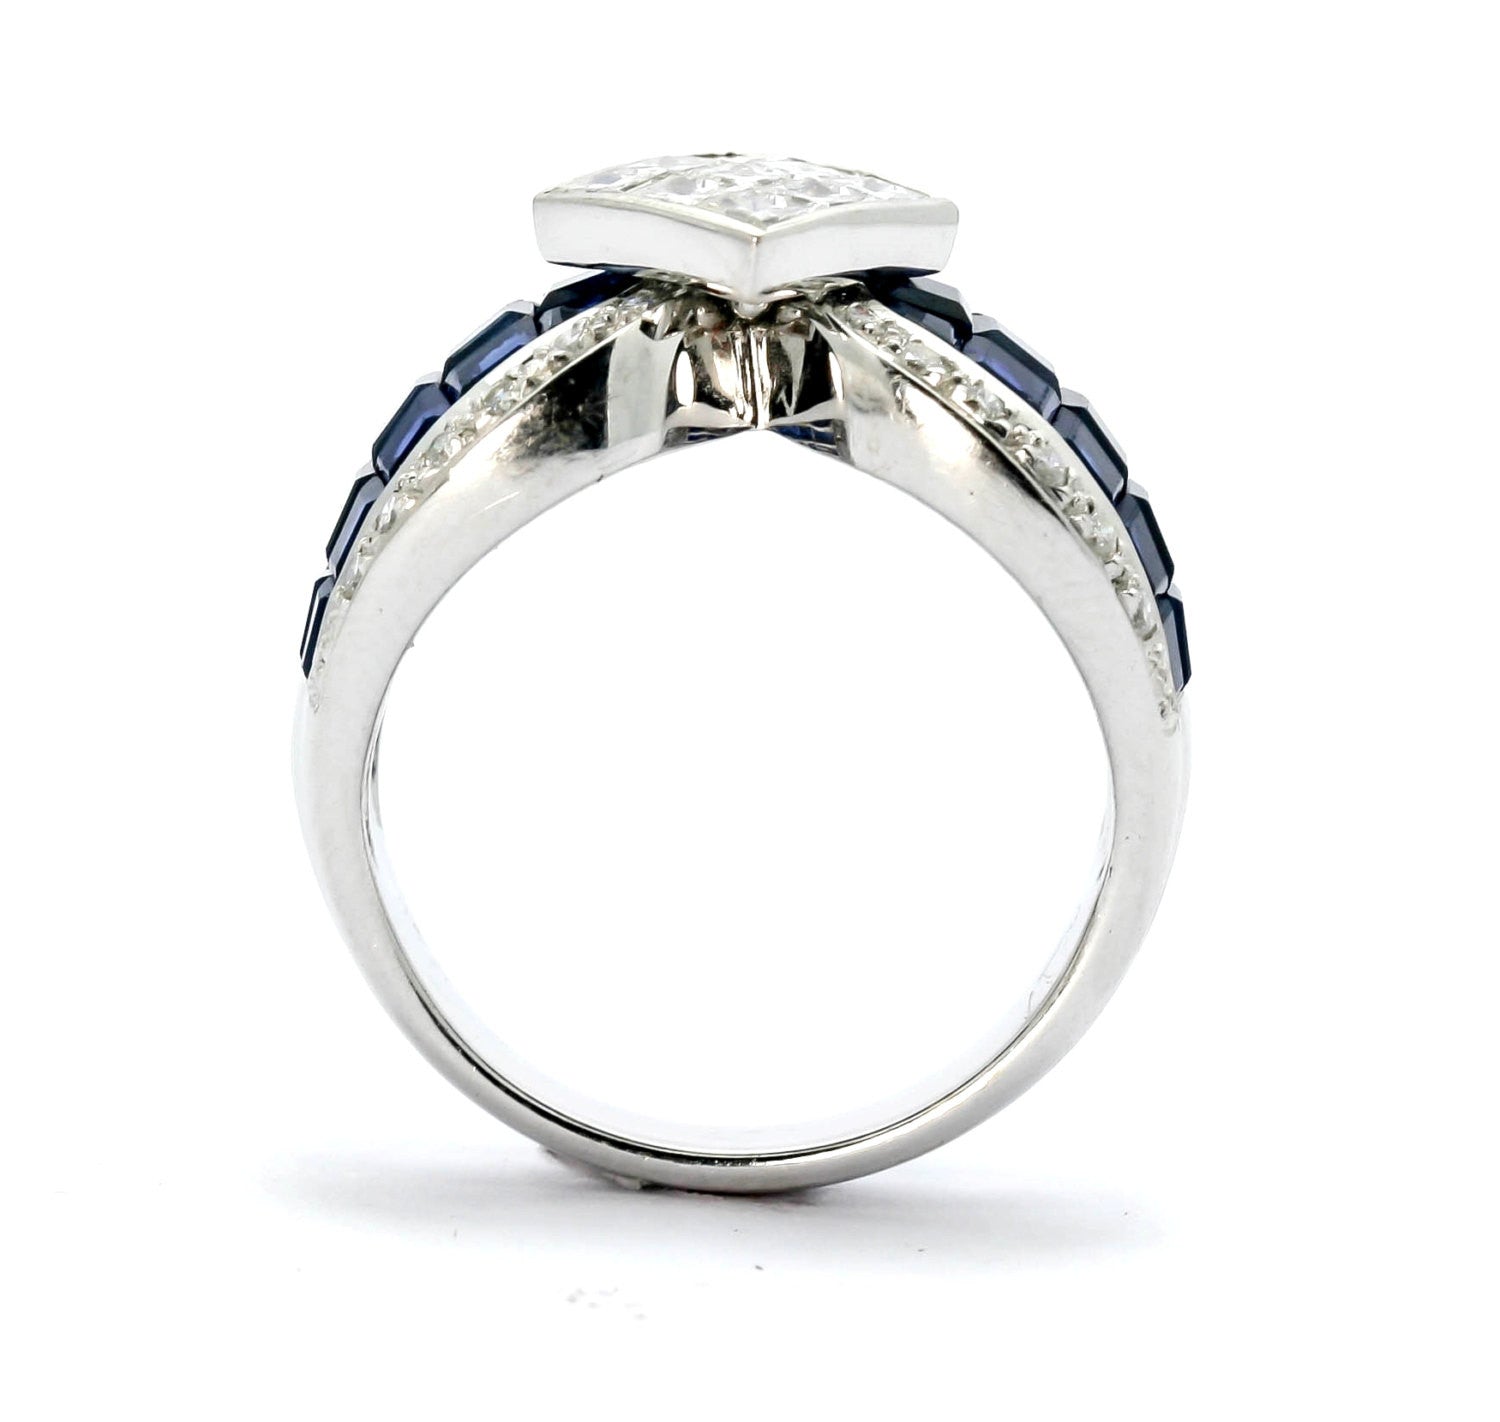 Blue Sapphire Gemstone & Diamond Cocktail Ring